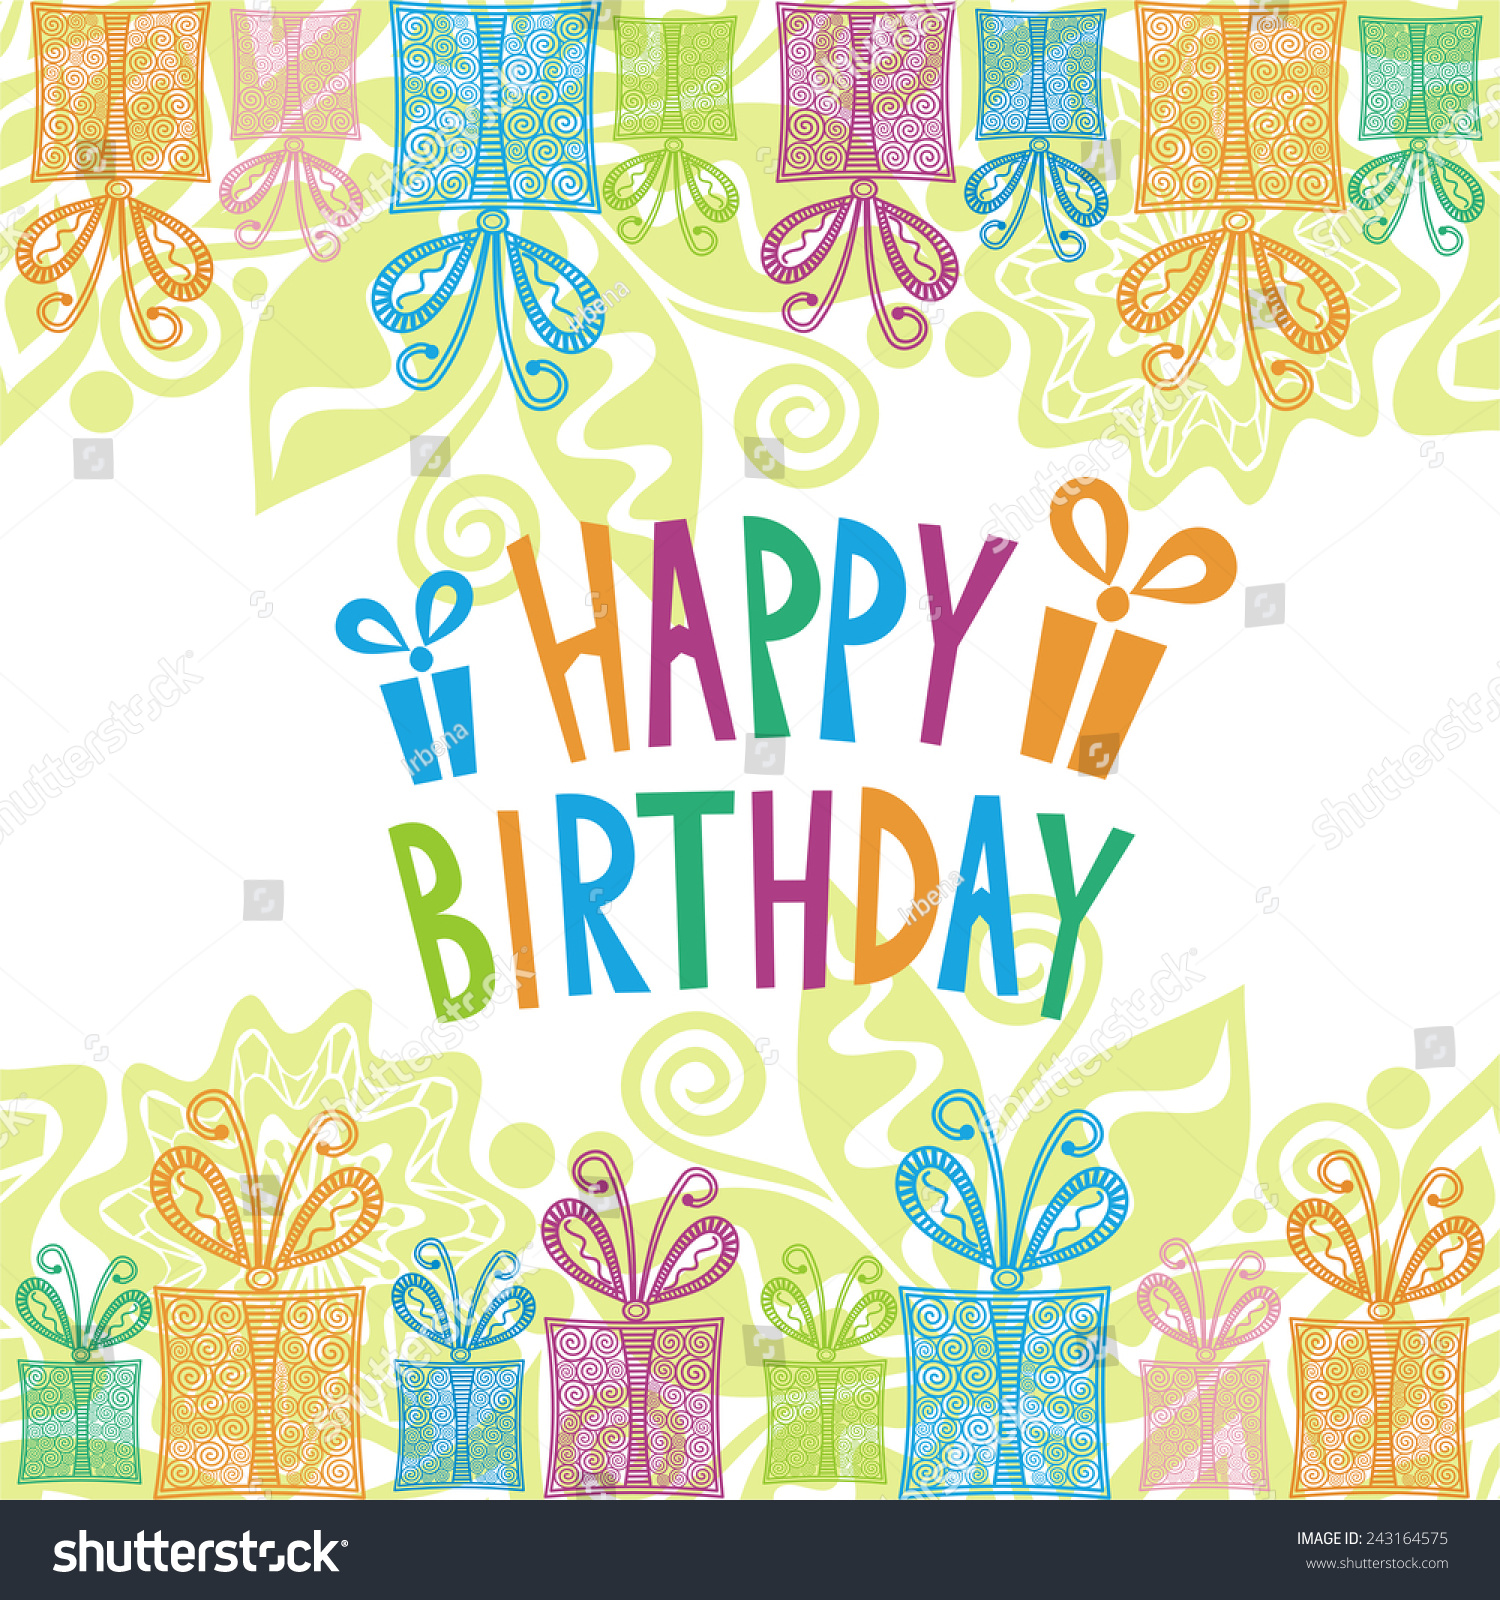 Happy Birthday Greeting Card Vector Illustration - 243164575 : Shutterstock